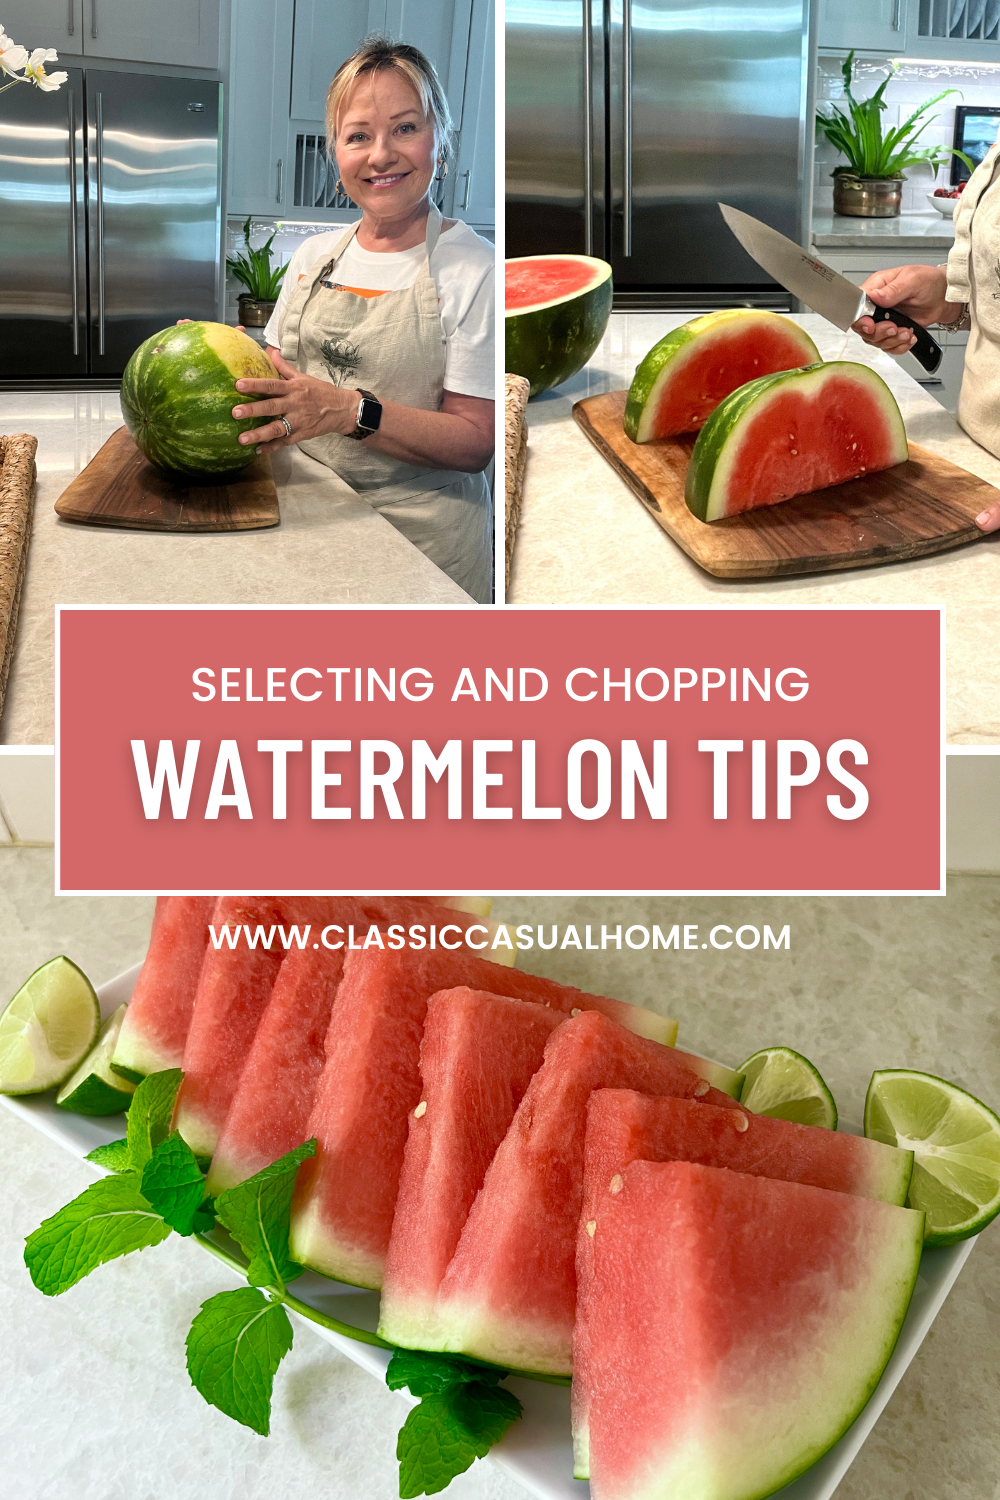 How to cut a watermelpn